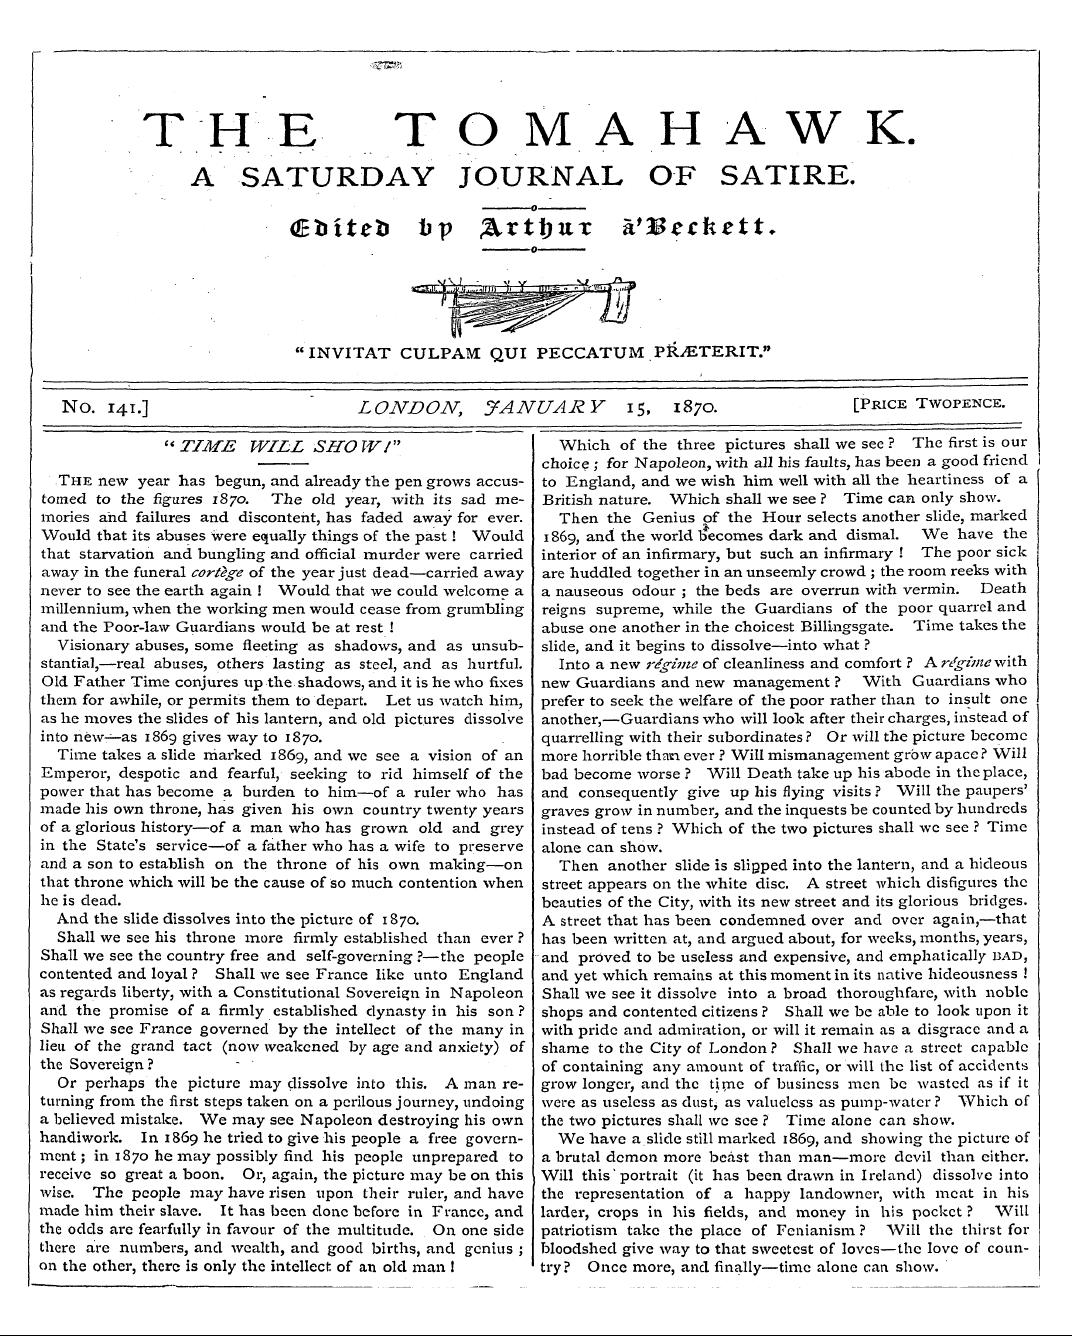 Tomahawk (1867-1870): jS F Y, 1st edition - The Tomahawk. A Saturday Journal Of Sati...